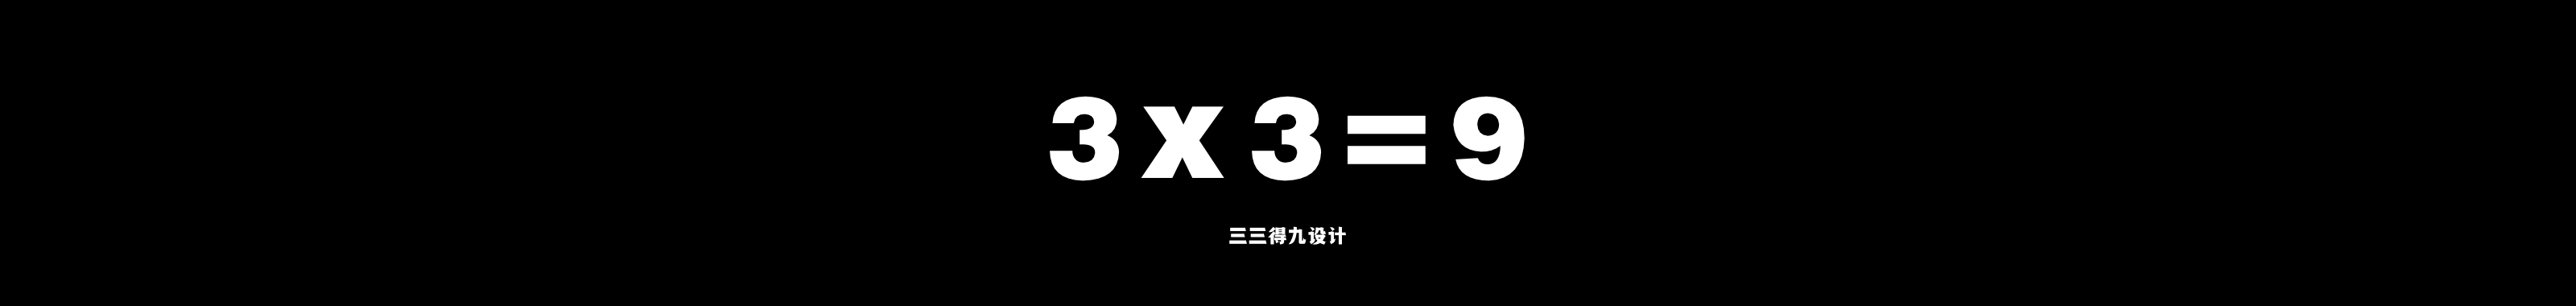 Баннер профиля 3X3=9 三三得九 Design